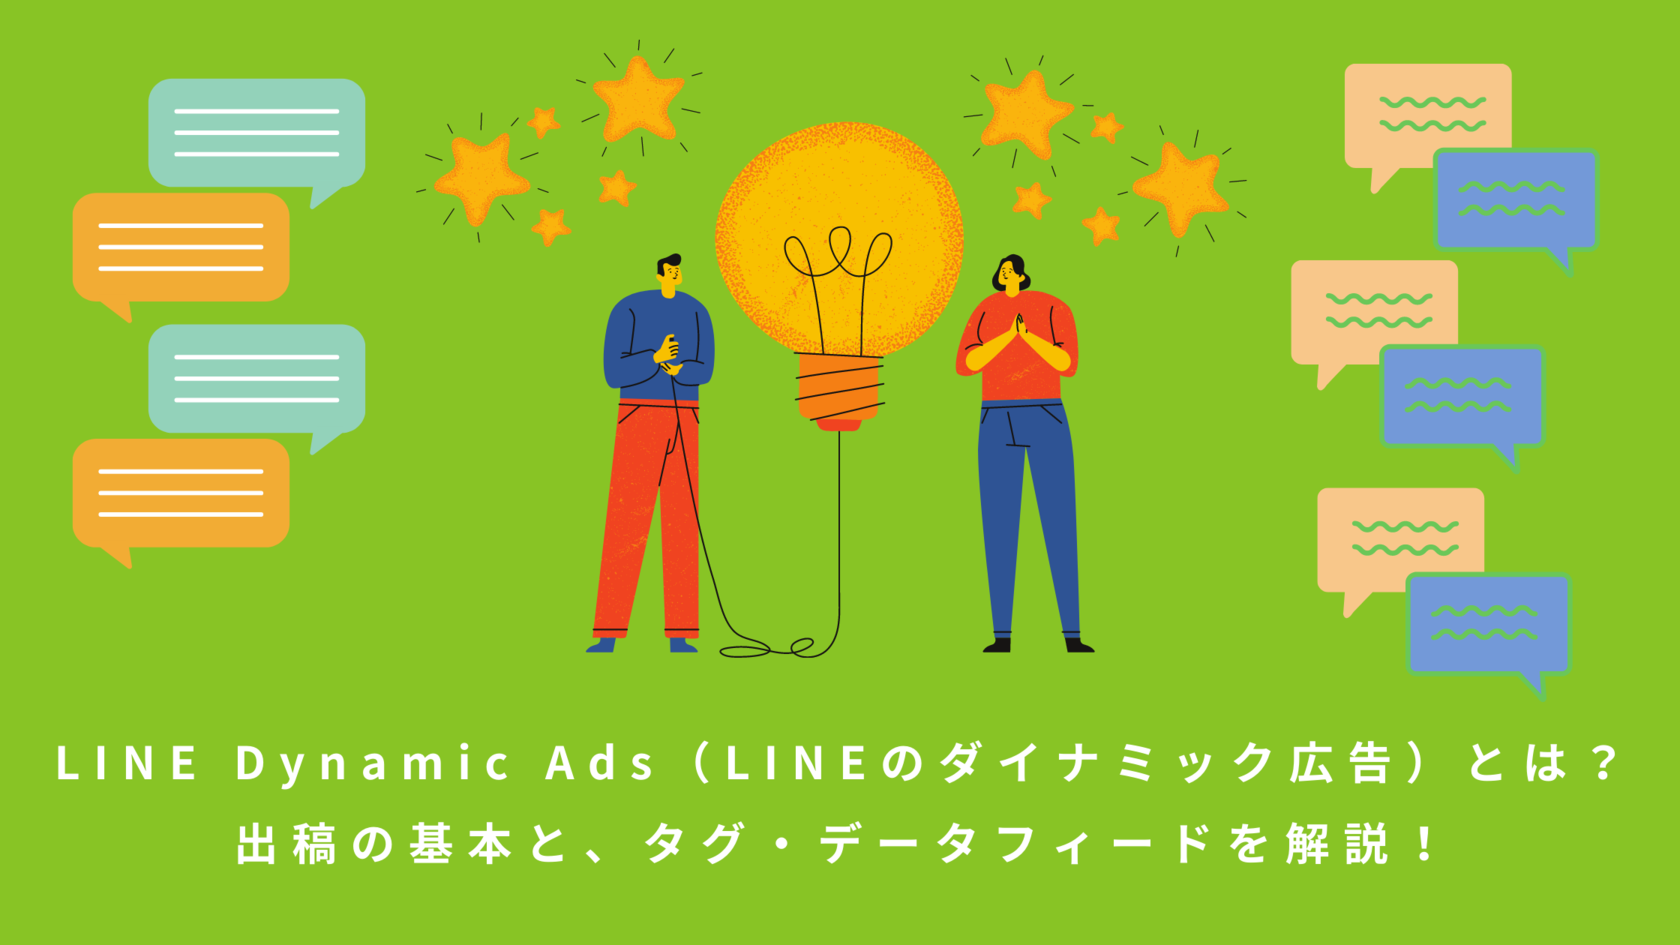 Line Dynamic Ads Lineのダイナミック広告 とは 導入のメリットから 効果を高めるポイントまで解説 ダイナミック広告代理運用サービス Feedmatic フィードマティック